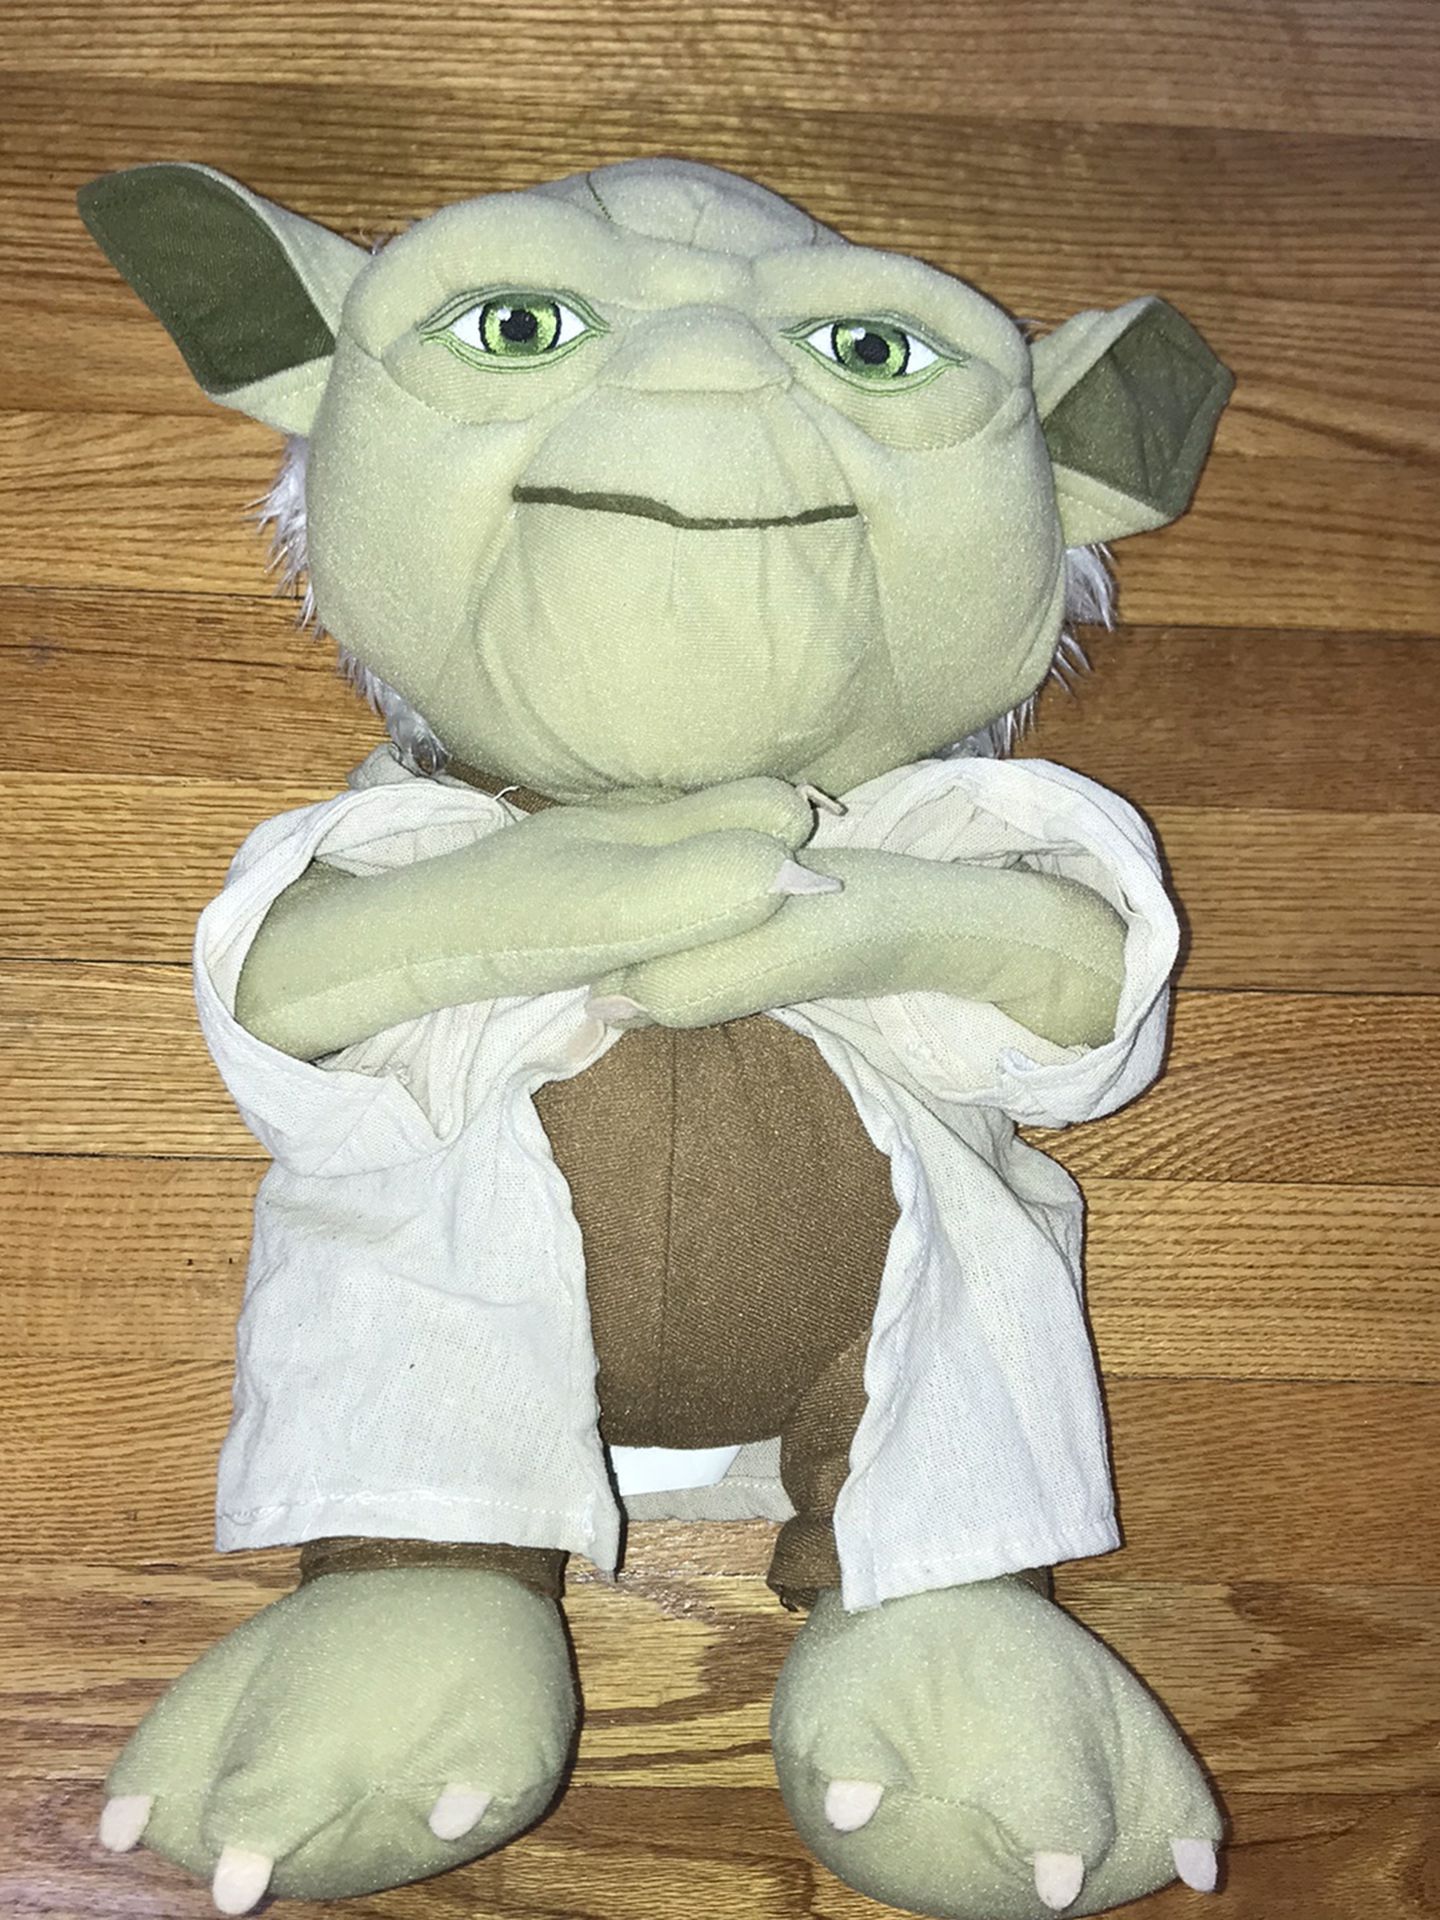 Star Wars Master Yoda Plush 18" Disney Store stuffed animal plushie Doll